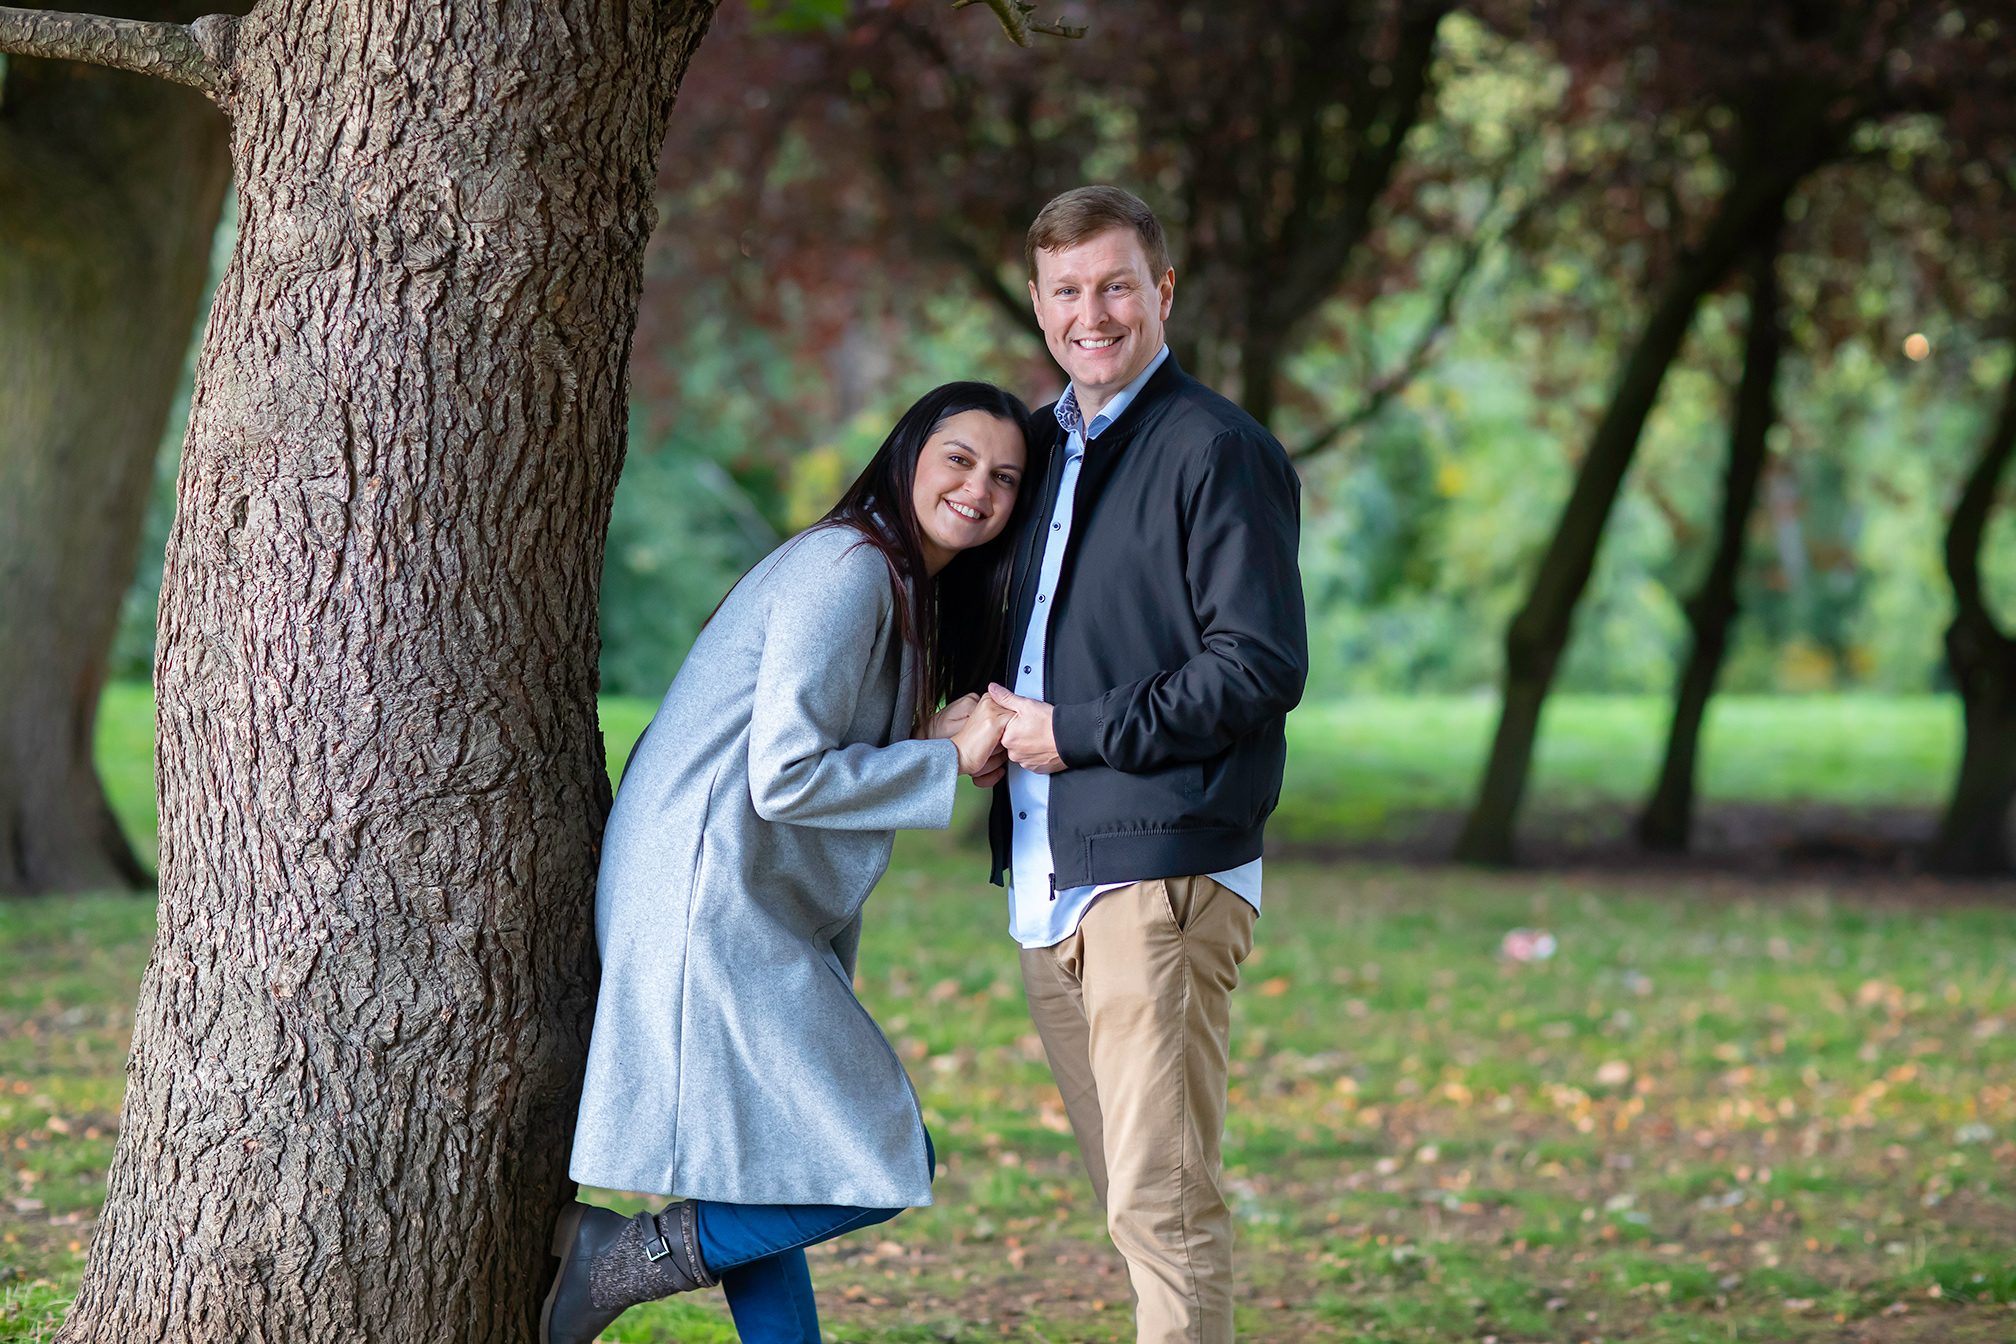 Couple by tree Alexandra Palace engagement photo shoot